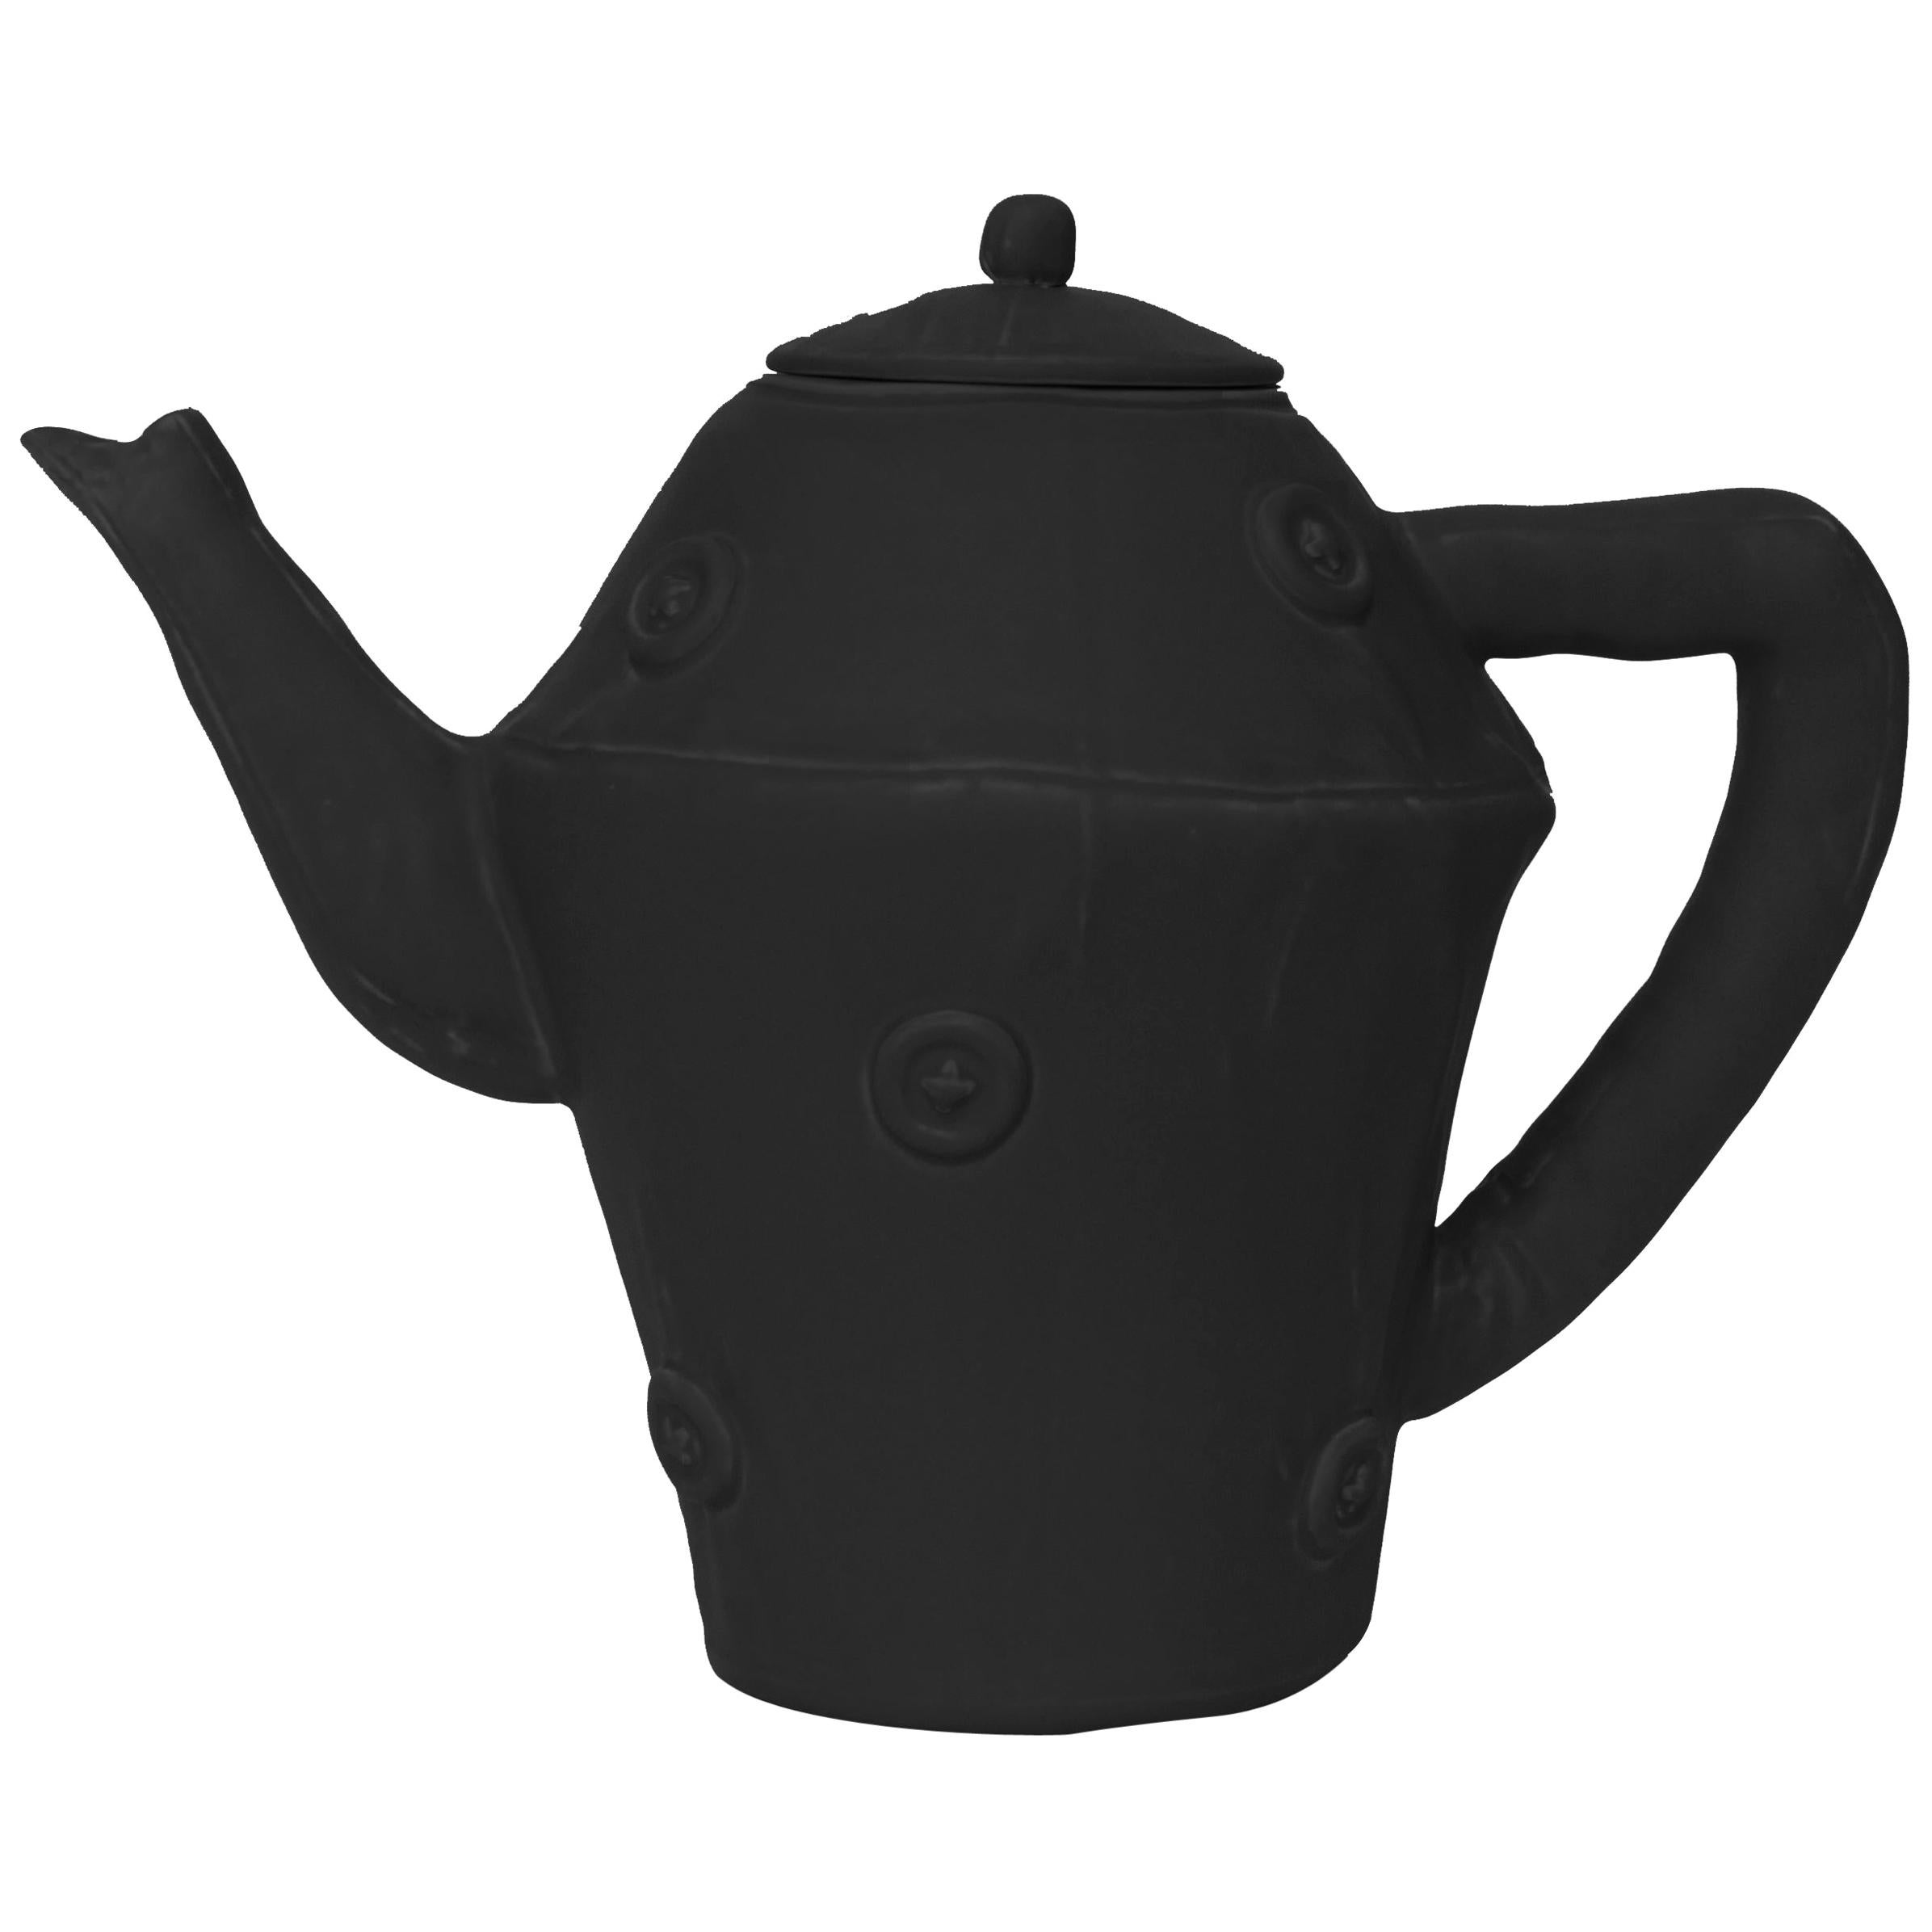 Weiche Teekanne, schwarze Keramik